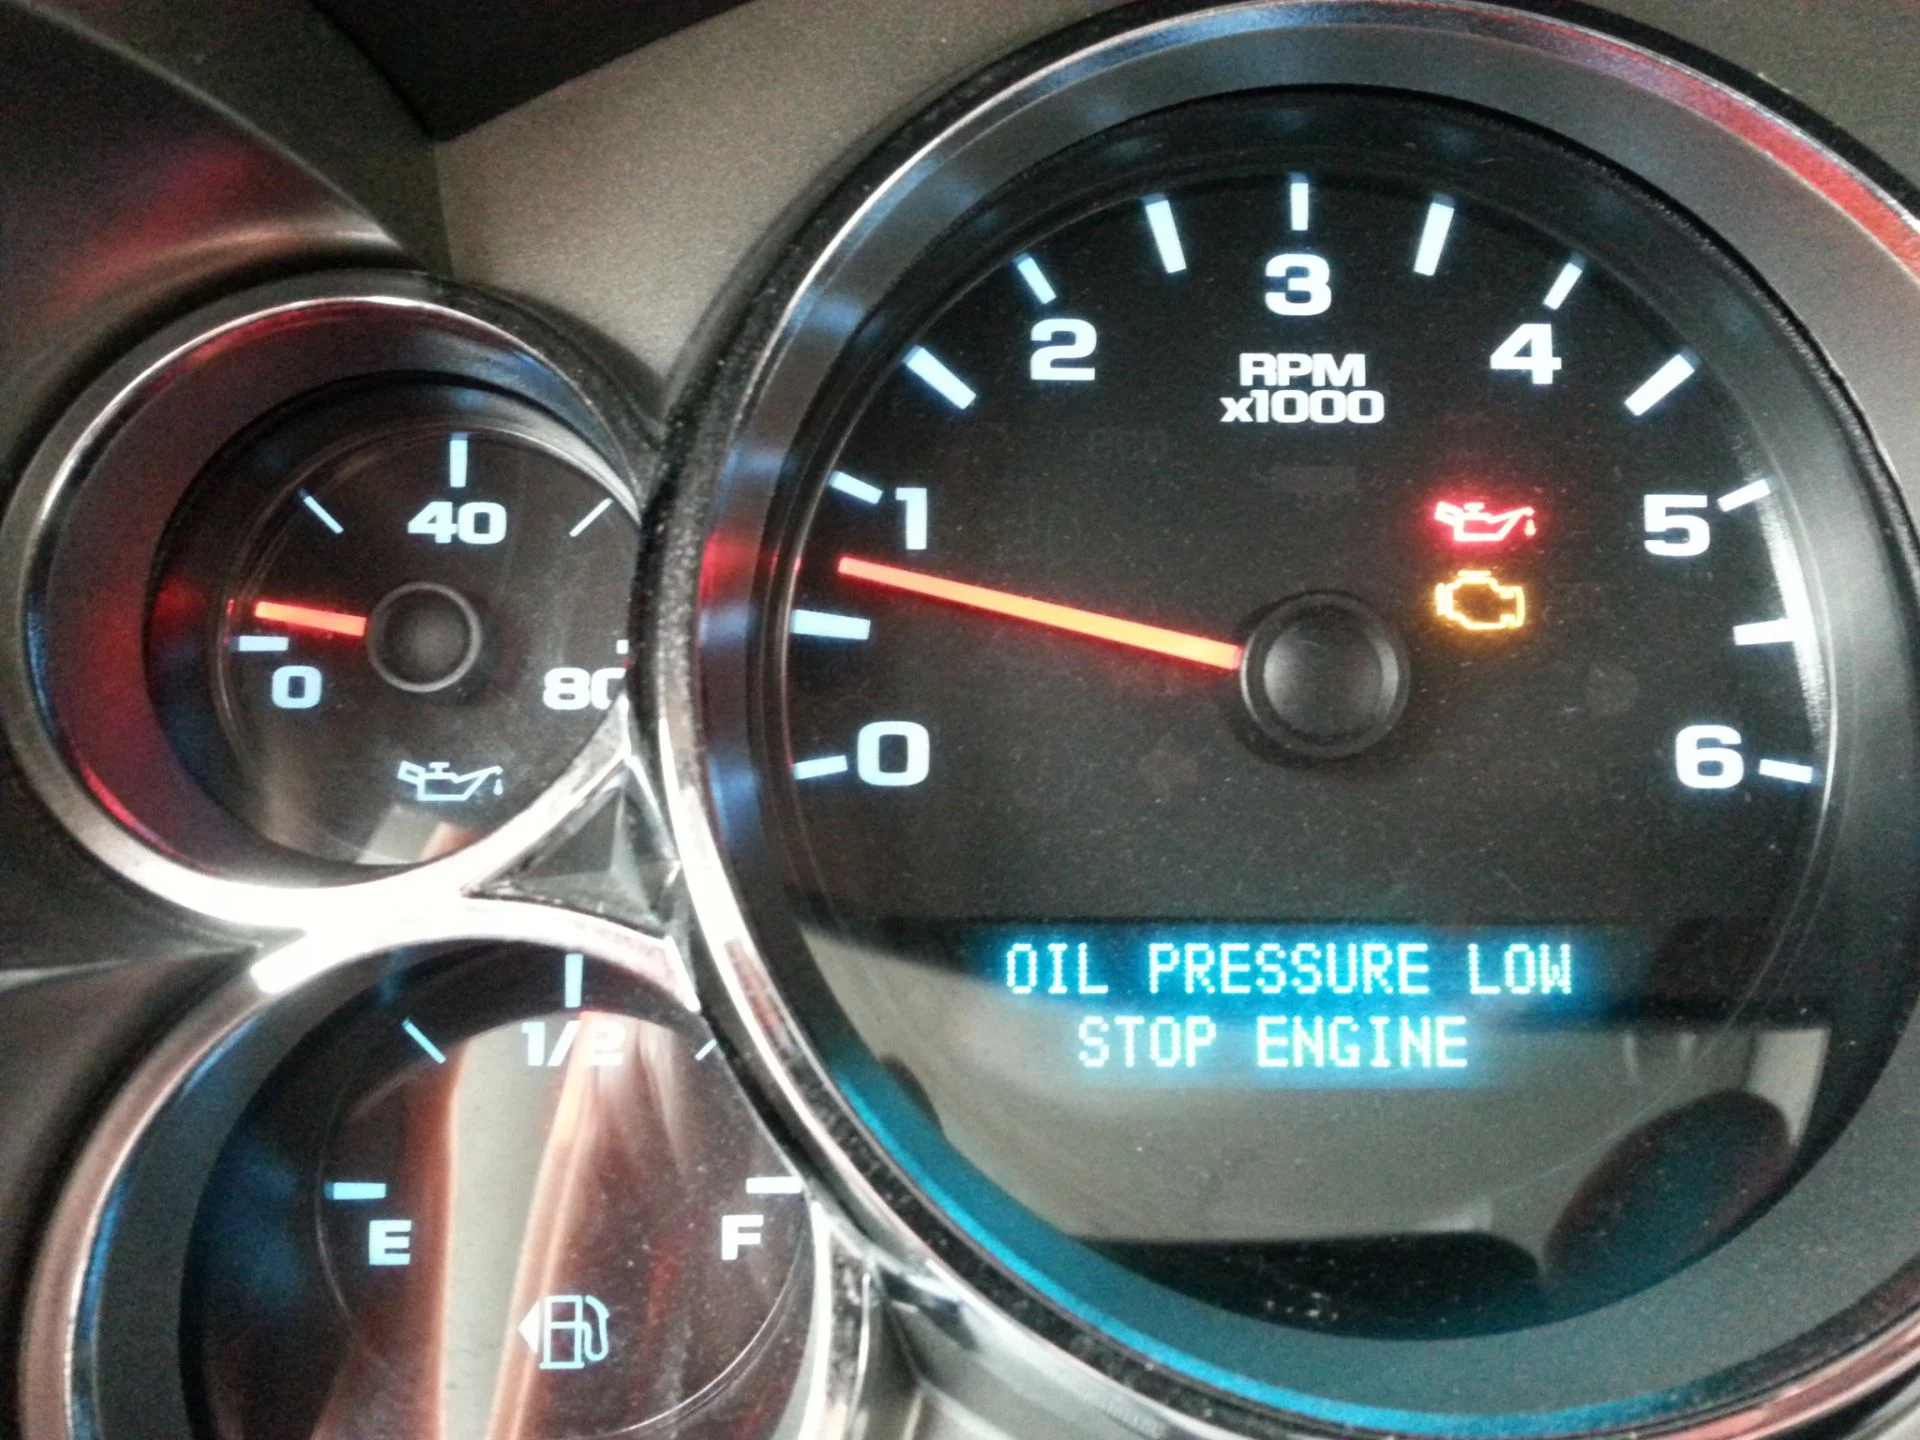 Oil Pressure Low – Stop Engine" Warning shown in the speedometer